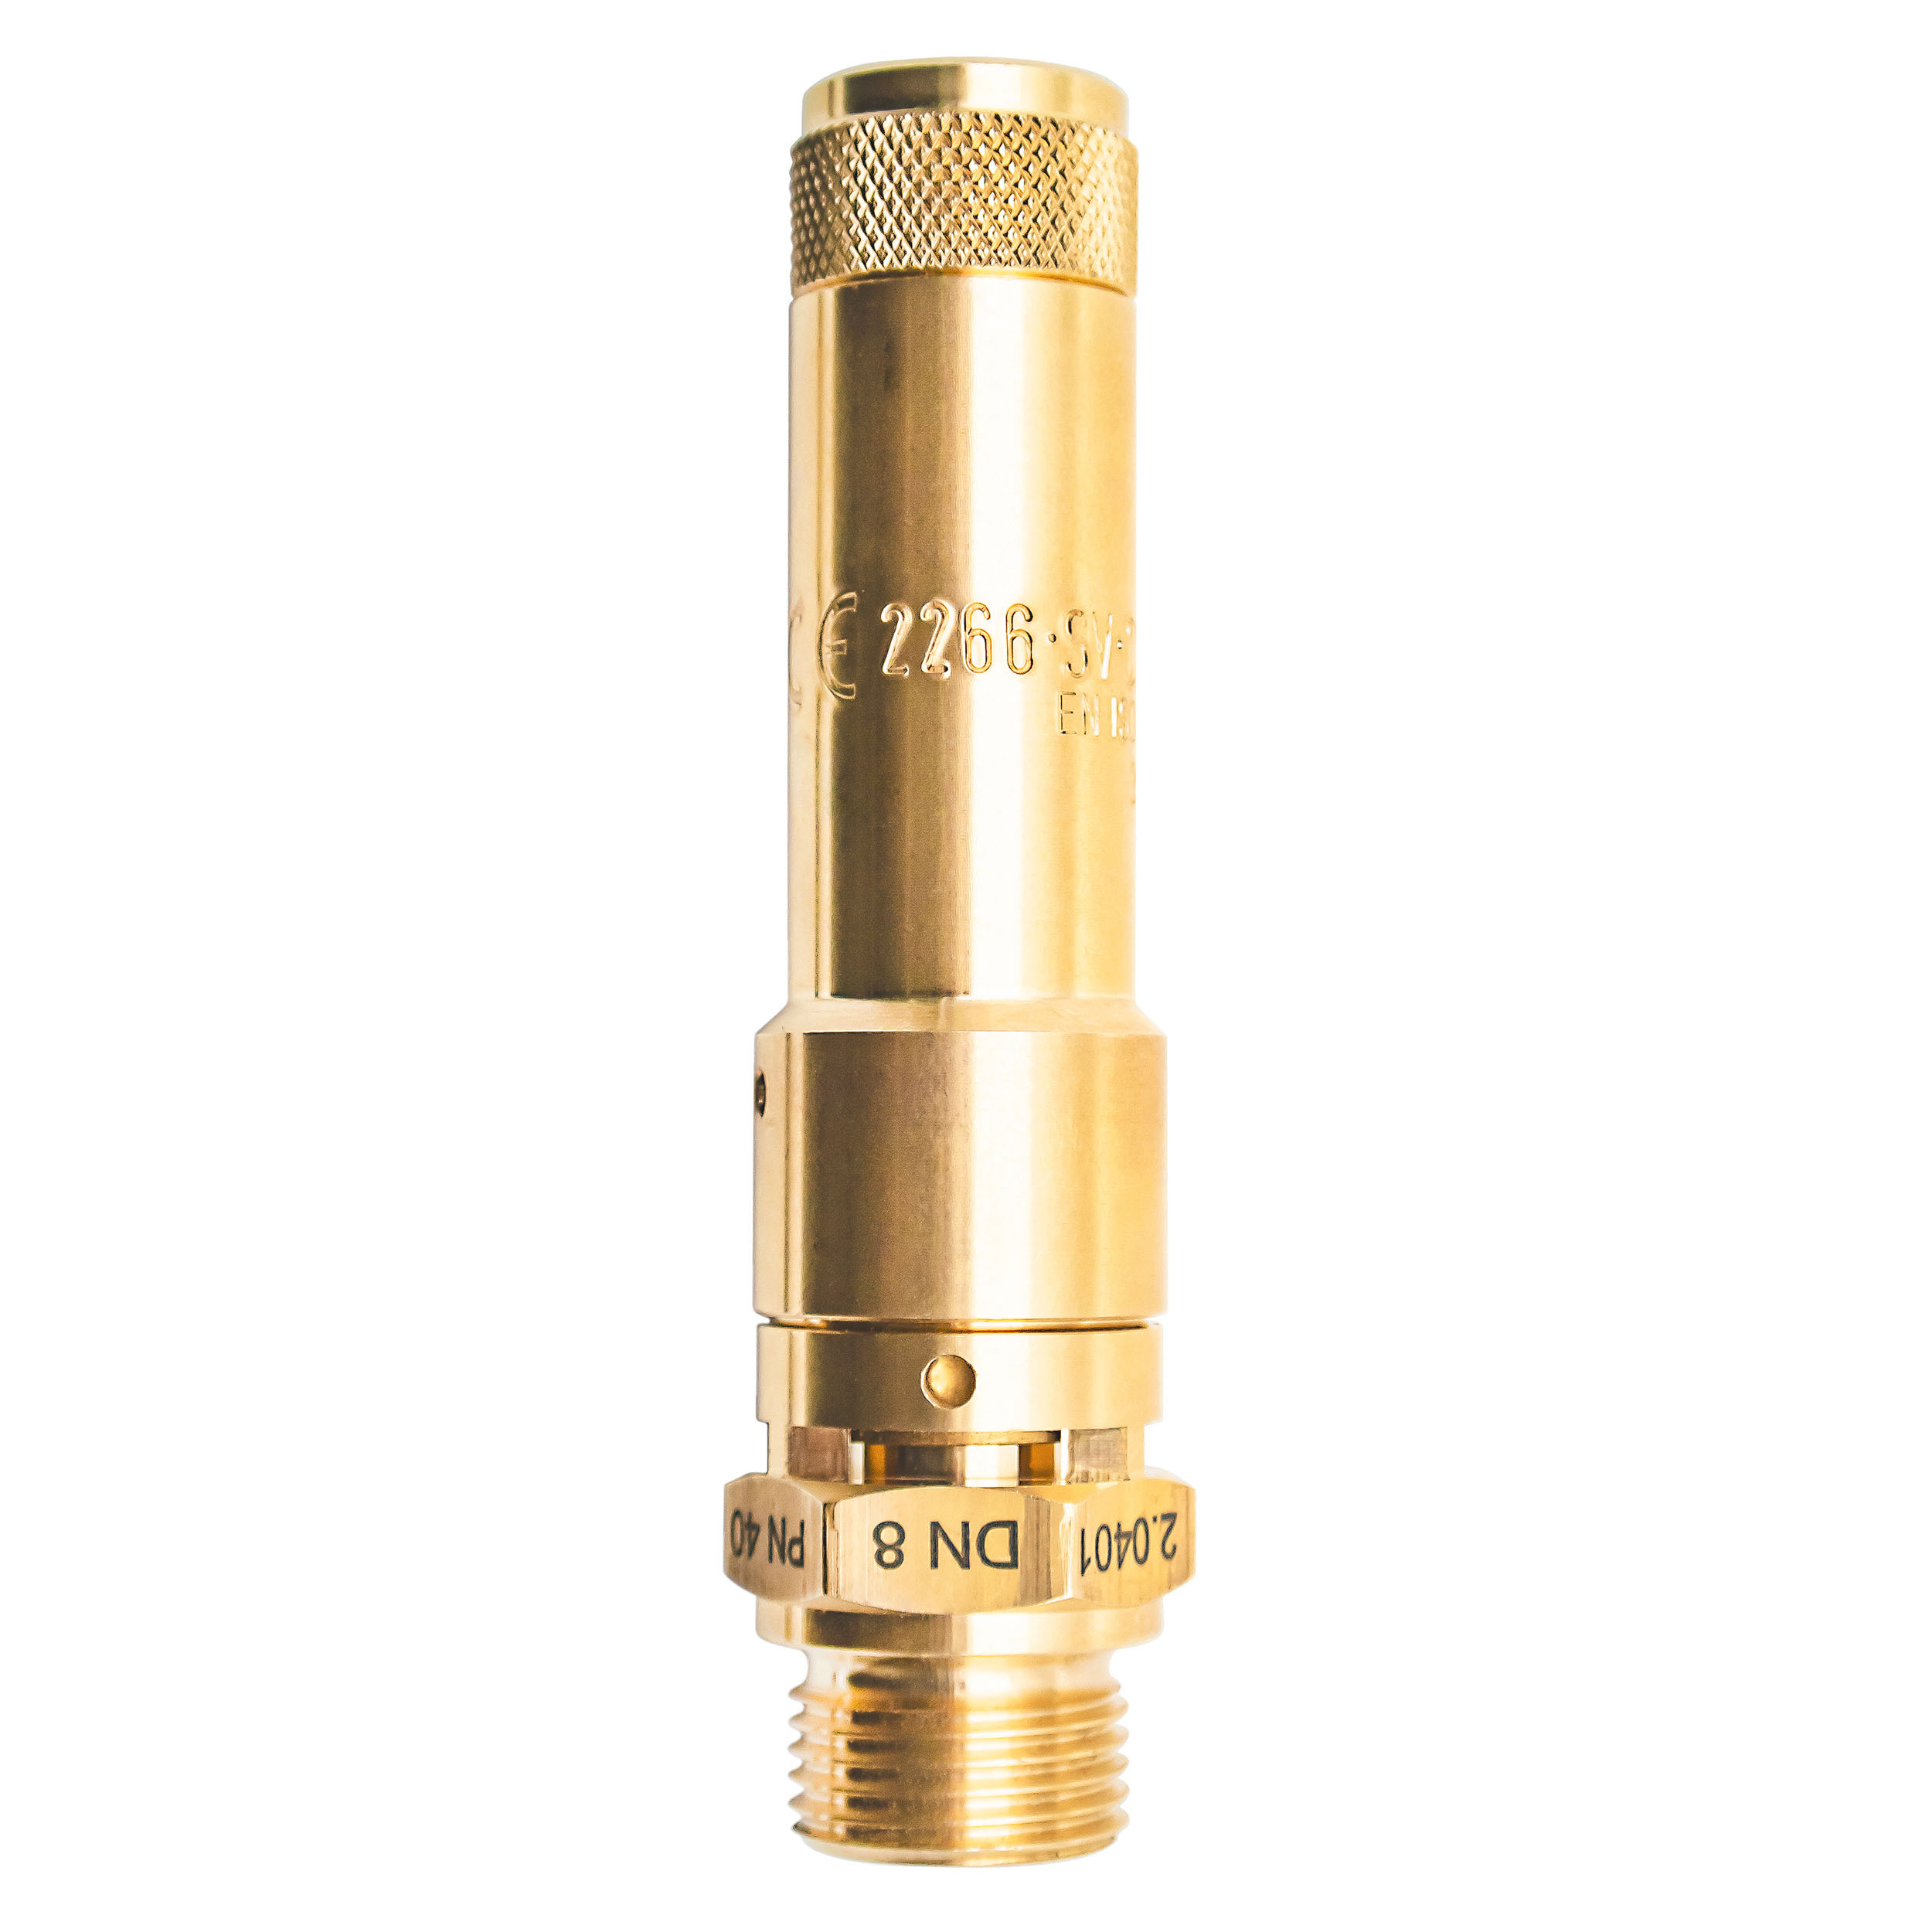 Savety valve component tested DN 8, G¼, set pressure: 5.2 bar (75,4 psi)